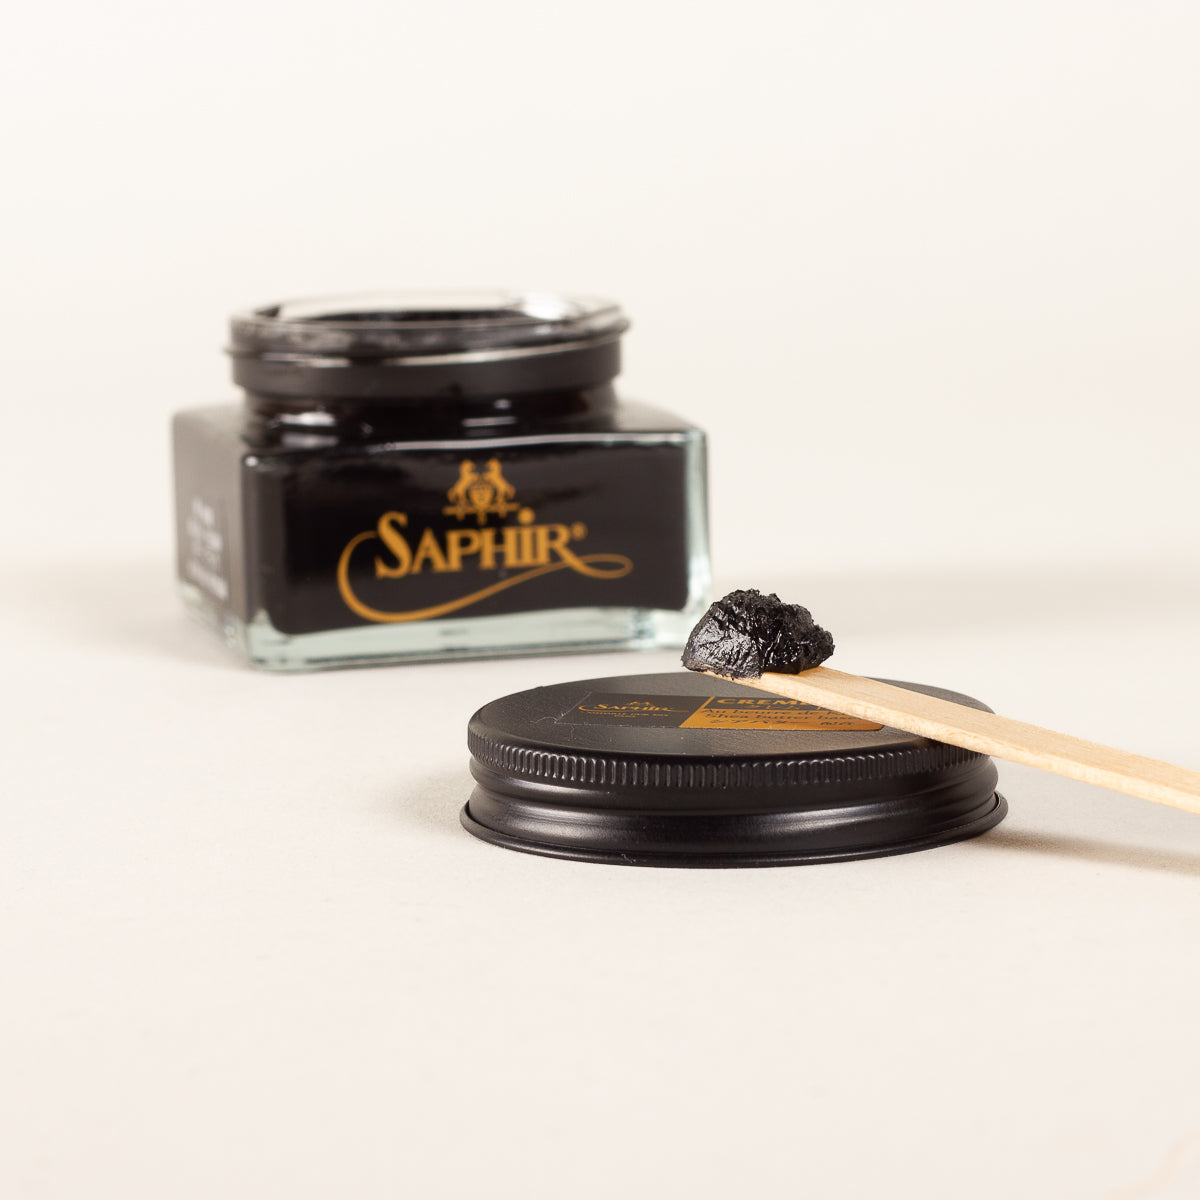 Saphir Médaille d'Or Pommadier shoe cream sample